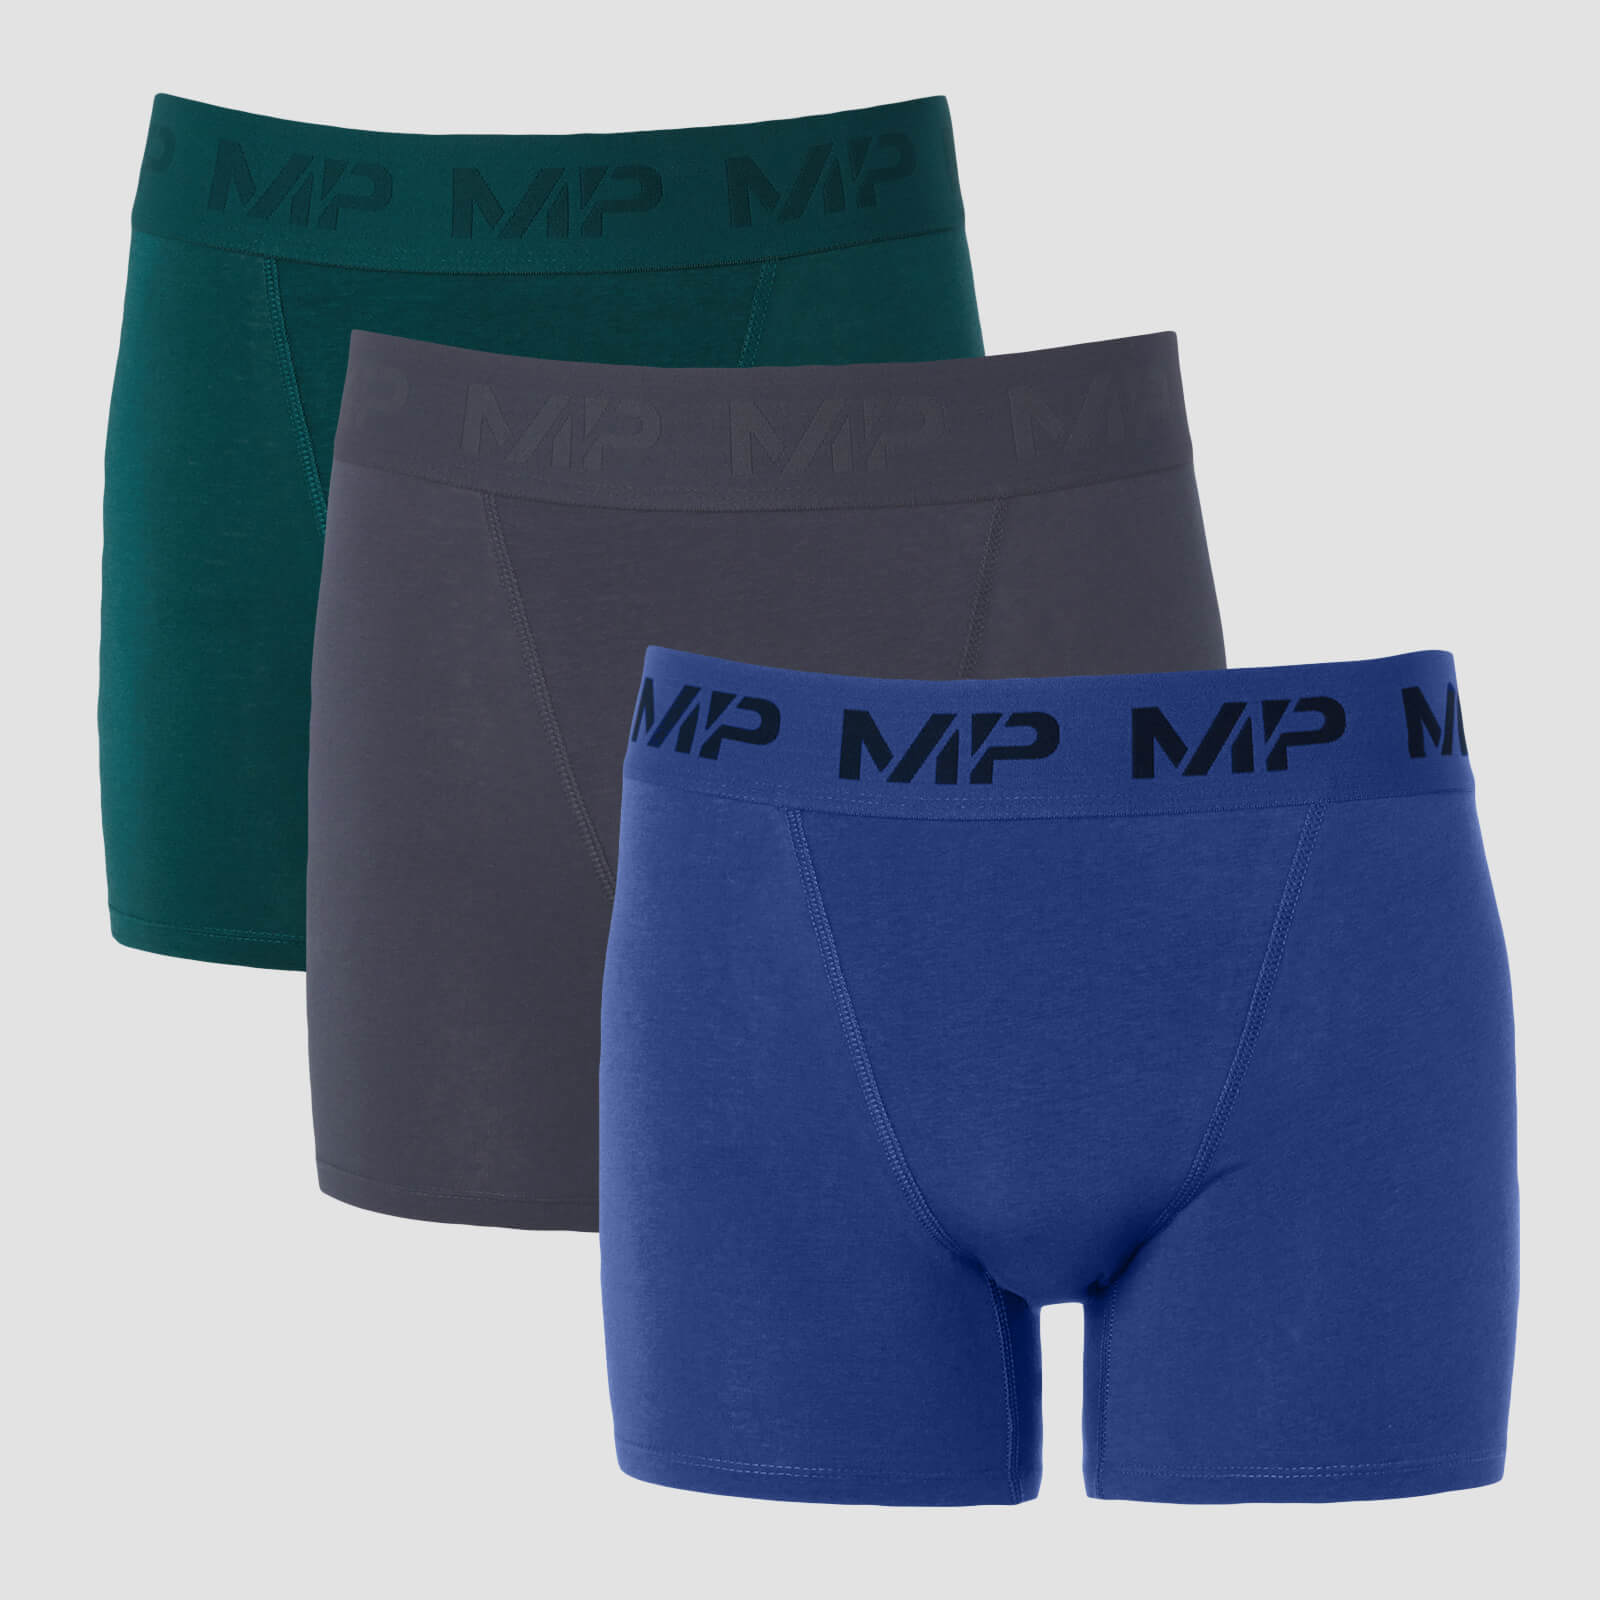 Купить MP Men's Essential Boxers (3 Pack) - Deep Teal/Graphite/Intense Blue - S, Myprotein International